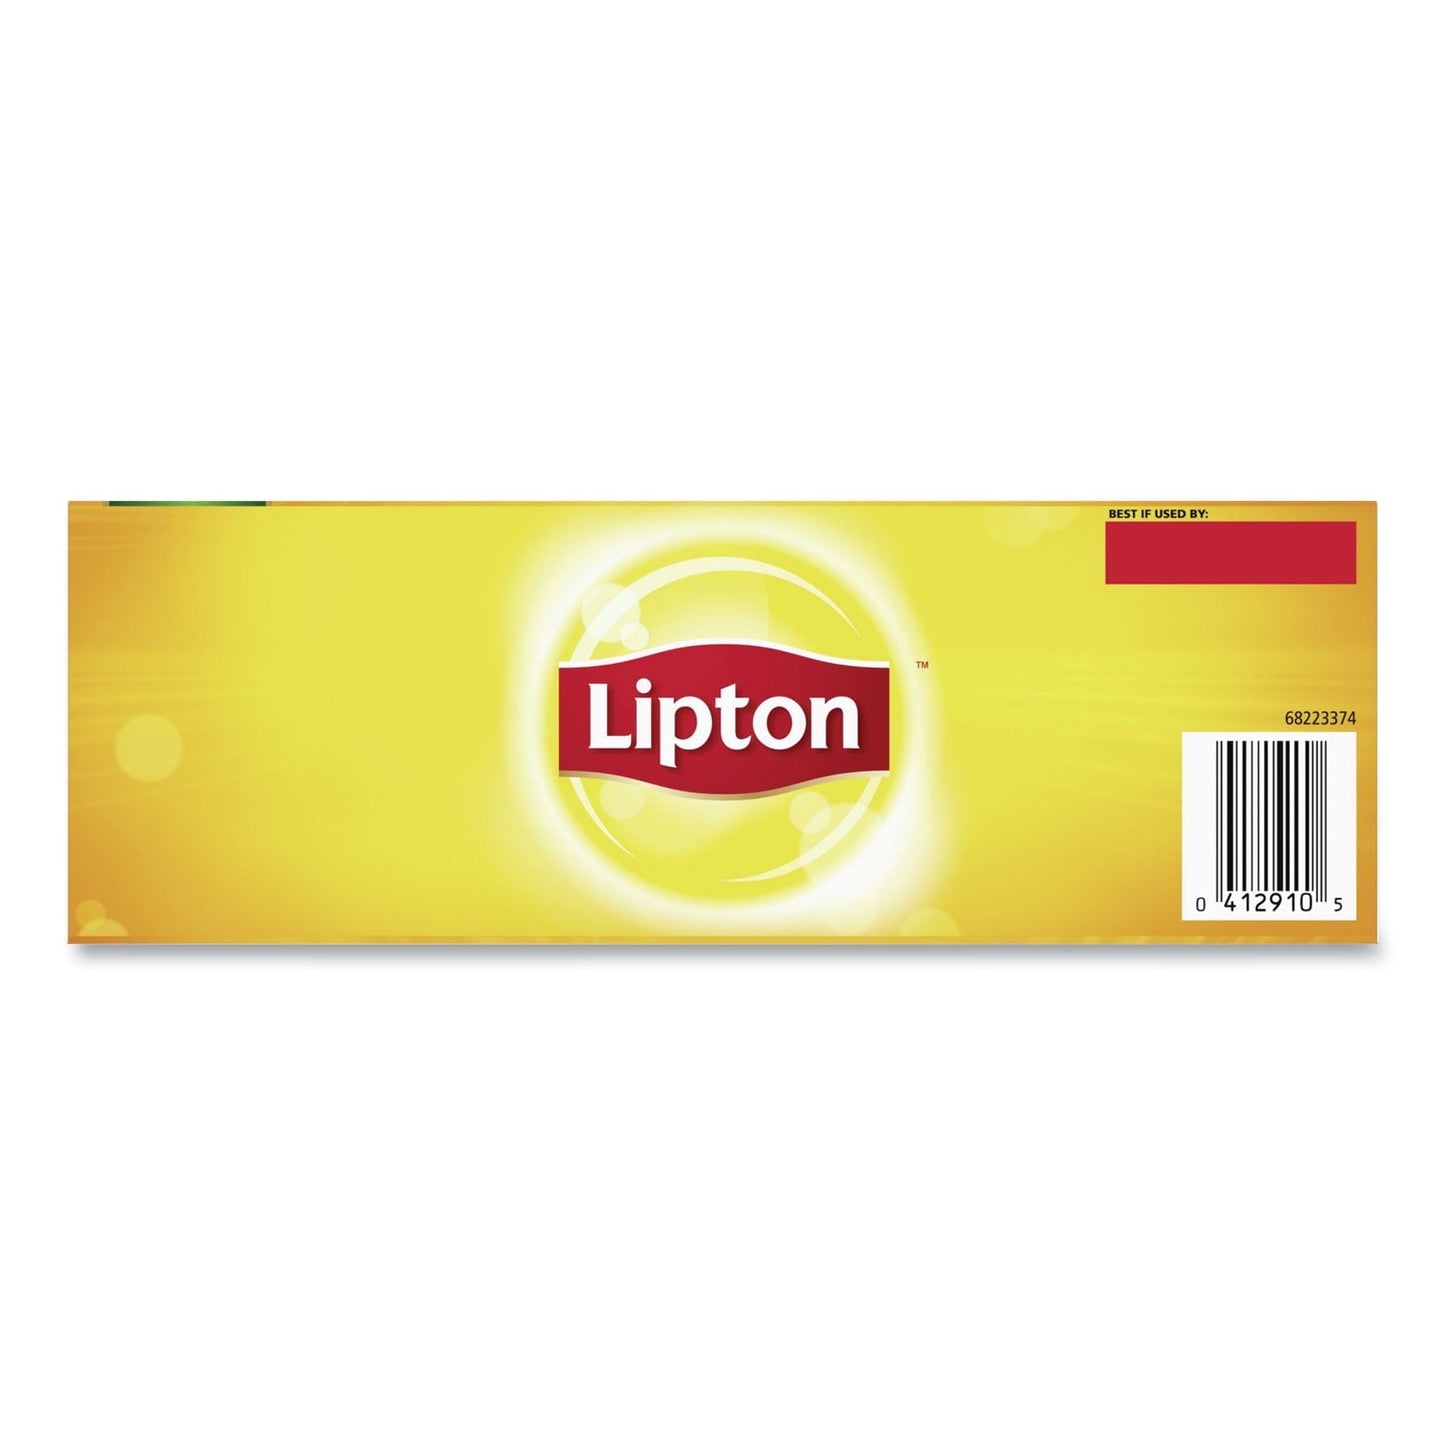 Lipton Tea Bags, Regular Black Tea, 100 Ct